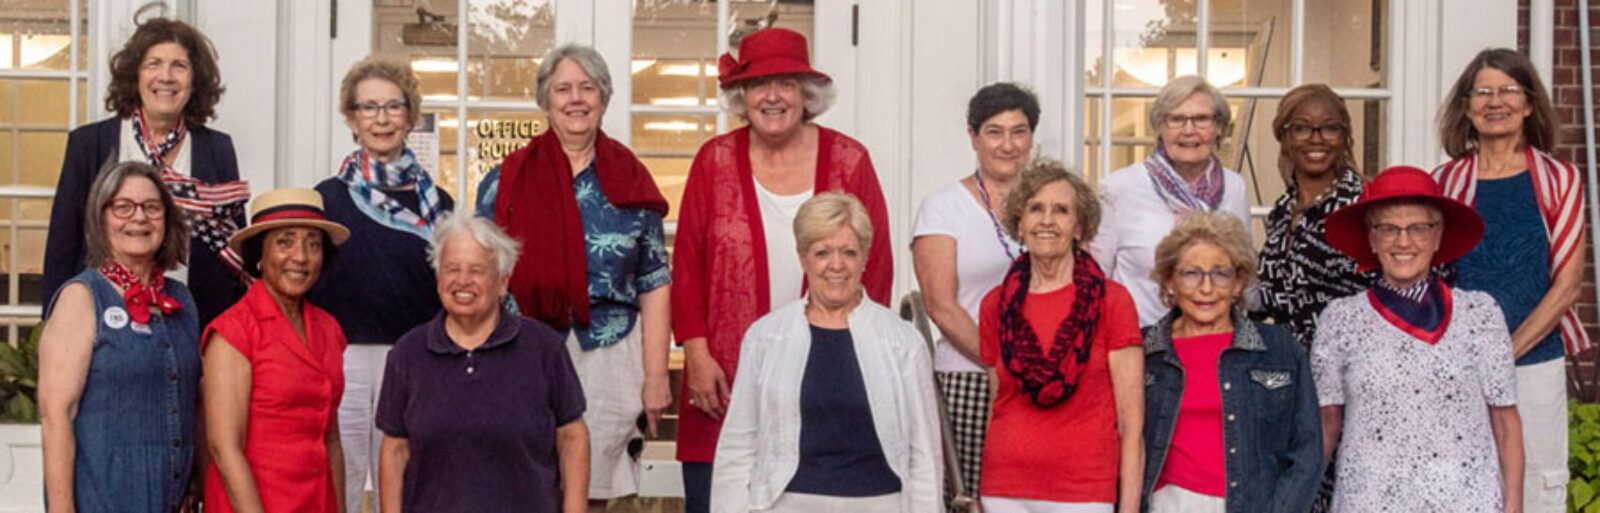 League of Women Voters of Grosse Pointe